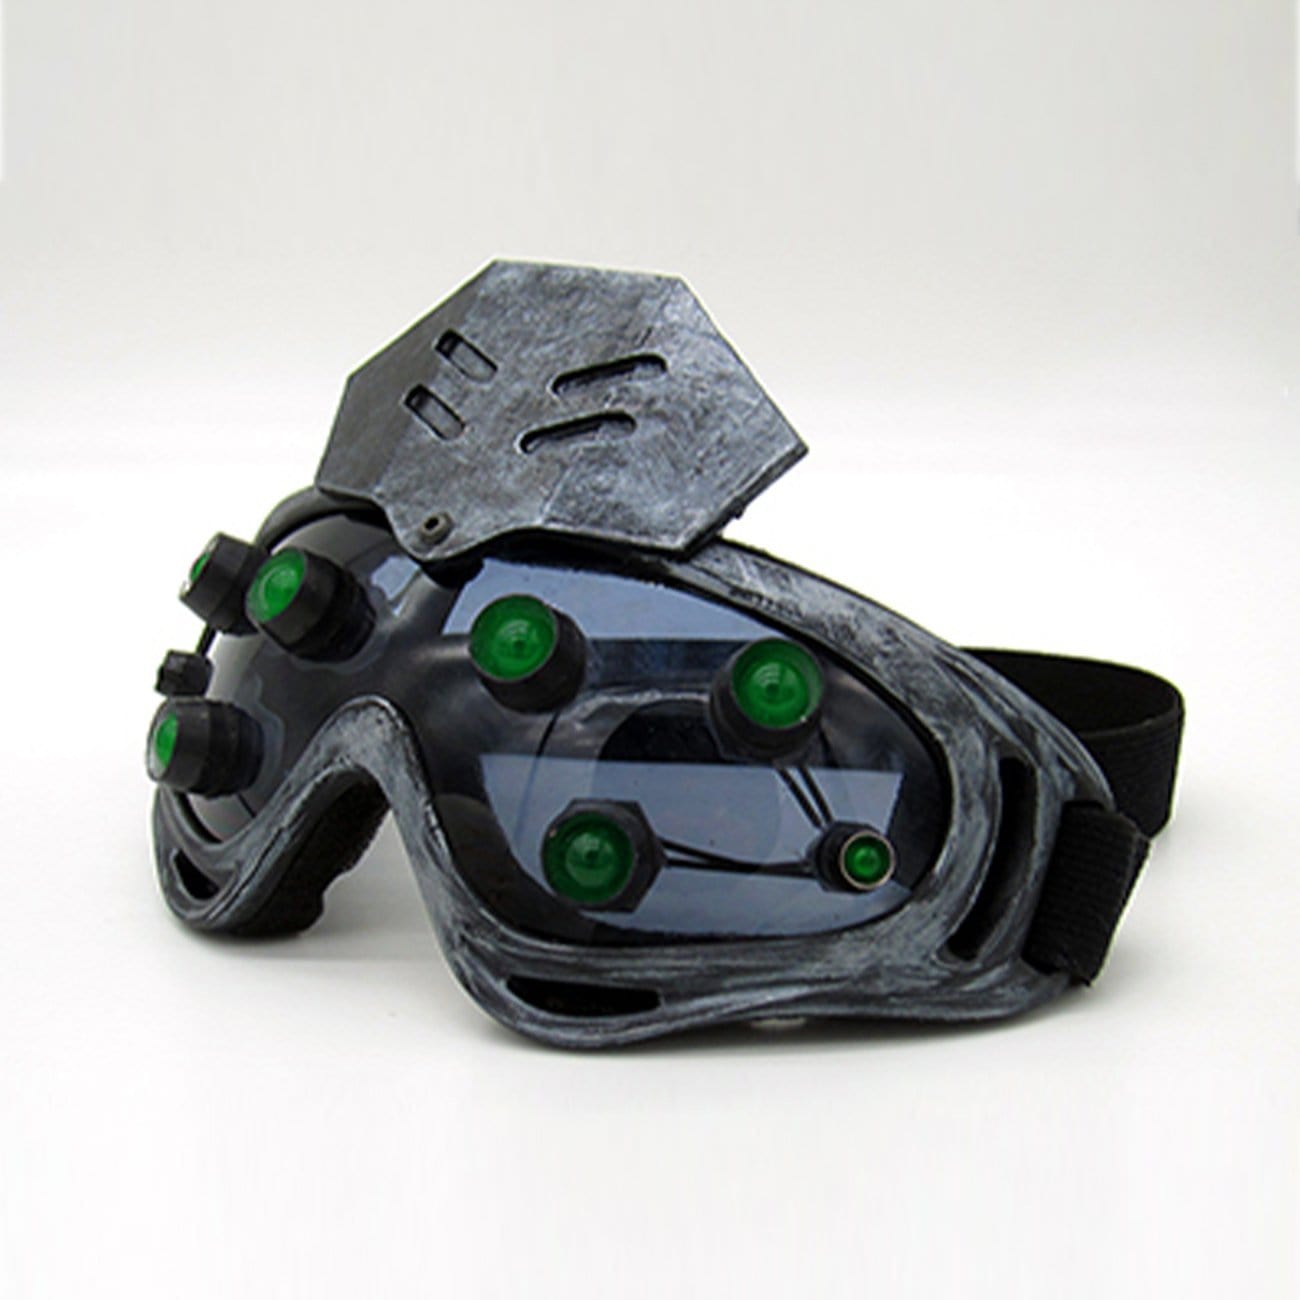 TO Cyberpunk Mechanical Sci-fi Steam Glow Mask